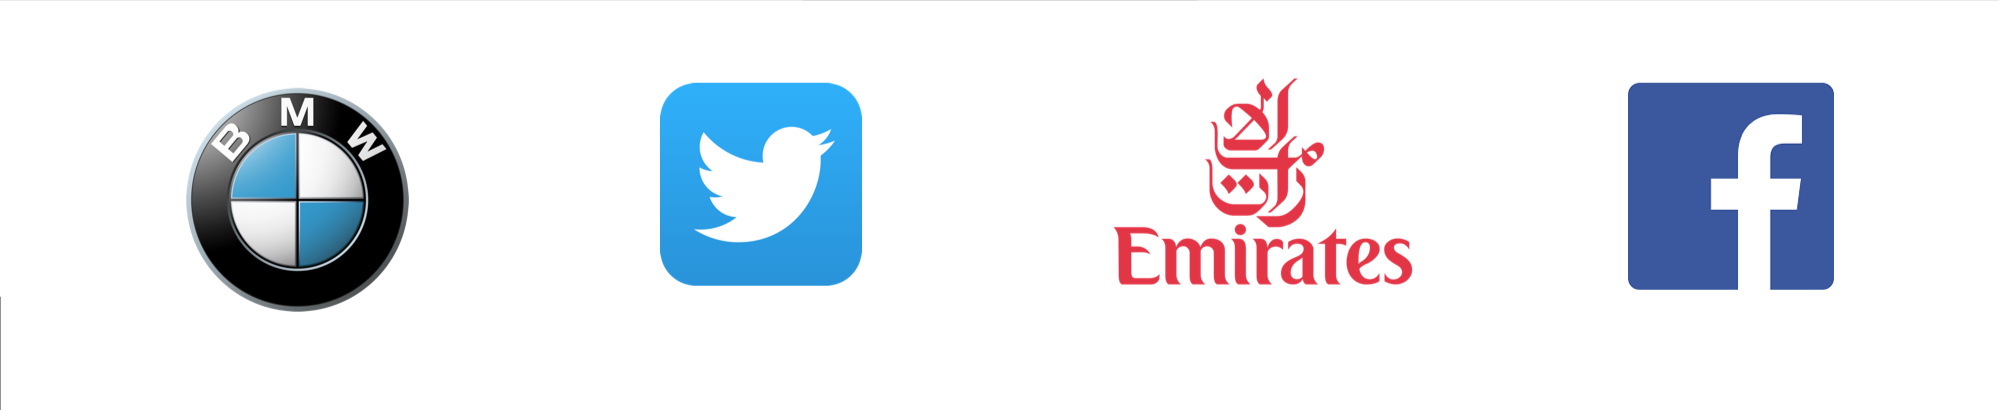 BMW, Emirates, Twitter and Facebook logos